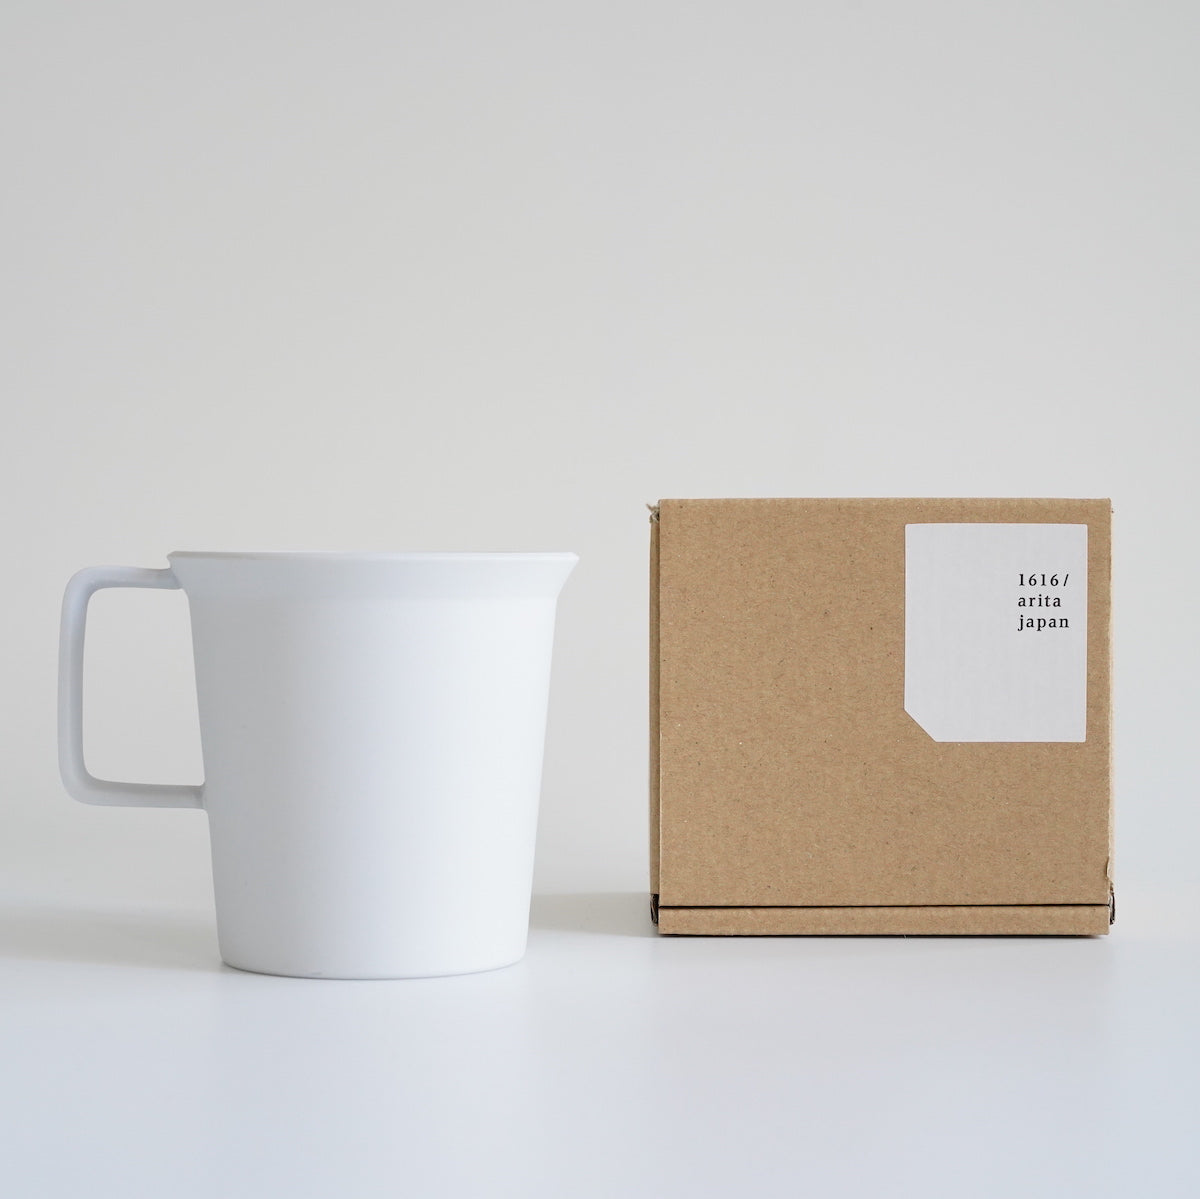 1616 / arita japan TY "Standard" Mug Grey with packaging